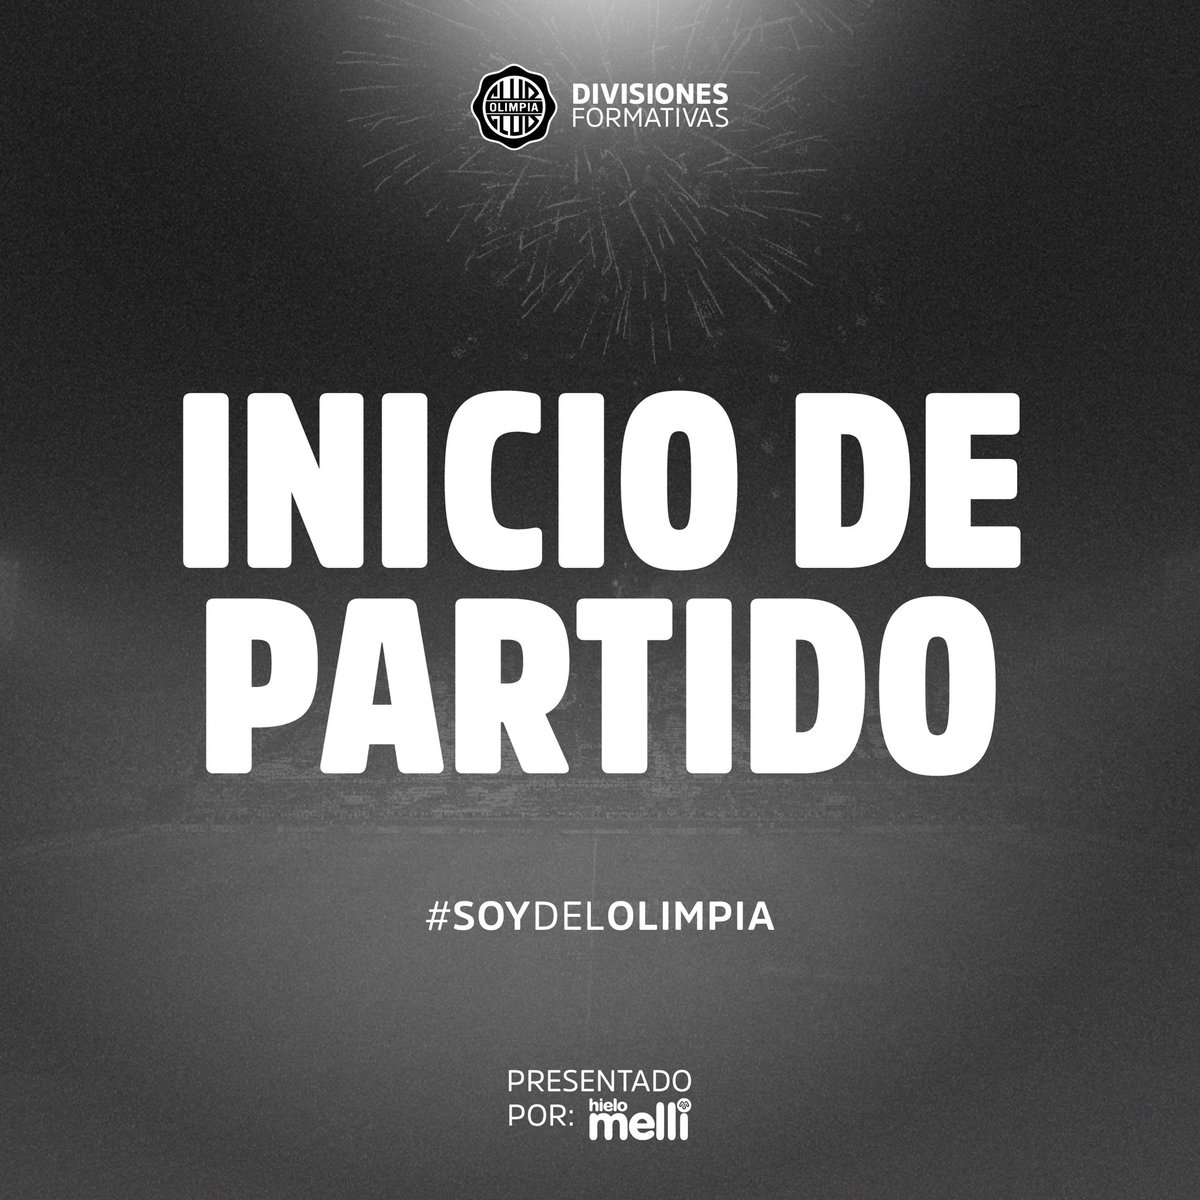 🔳 #OlimpiaLIVE | #TorneoAnual

➡️ #Sub16 | Fecha 11.

📋 ¡En marcha el partido en Villeta! ⚽️

➖ #Olimpia 🆚 Libertad. 

#SoyDelOlimpia
#JuegaOlimpia ⚪⚫⚪